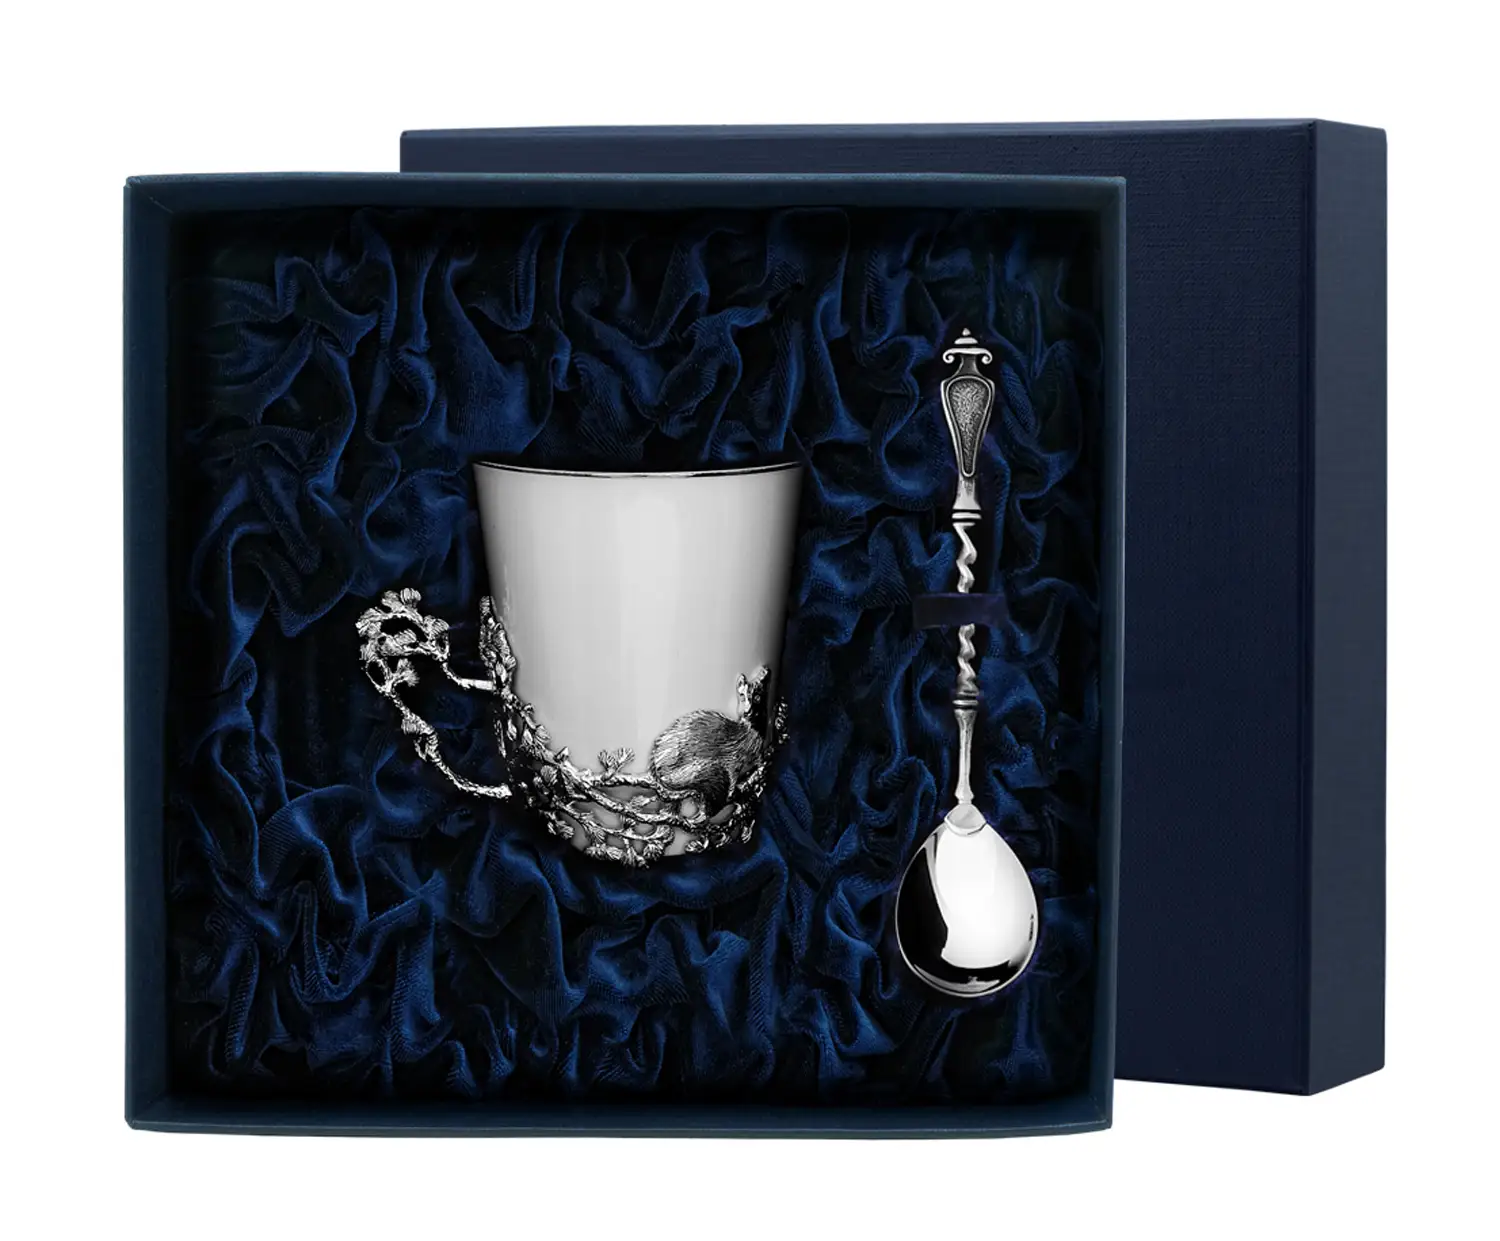 Набор чайная чашка Куница: ложка, чашка (Серебро 925) набор чайная чашка зимородок ложка чашка серебро 925